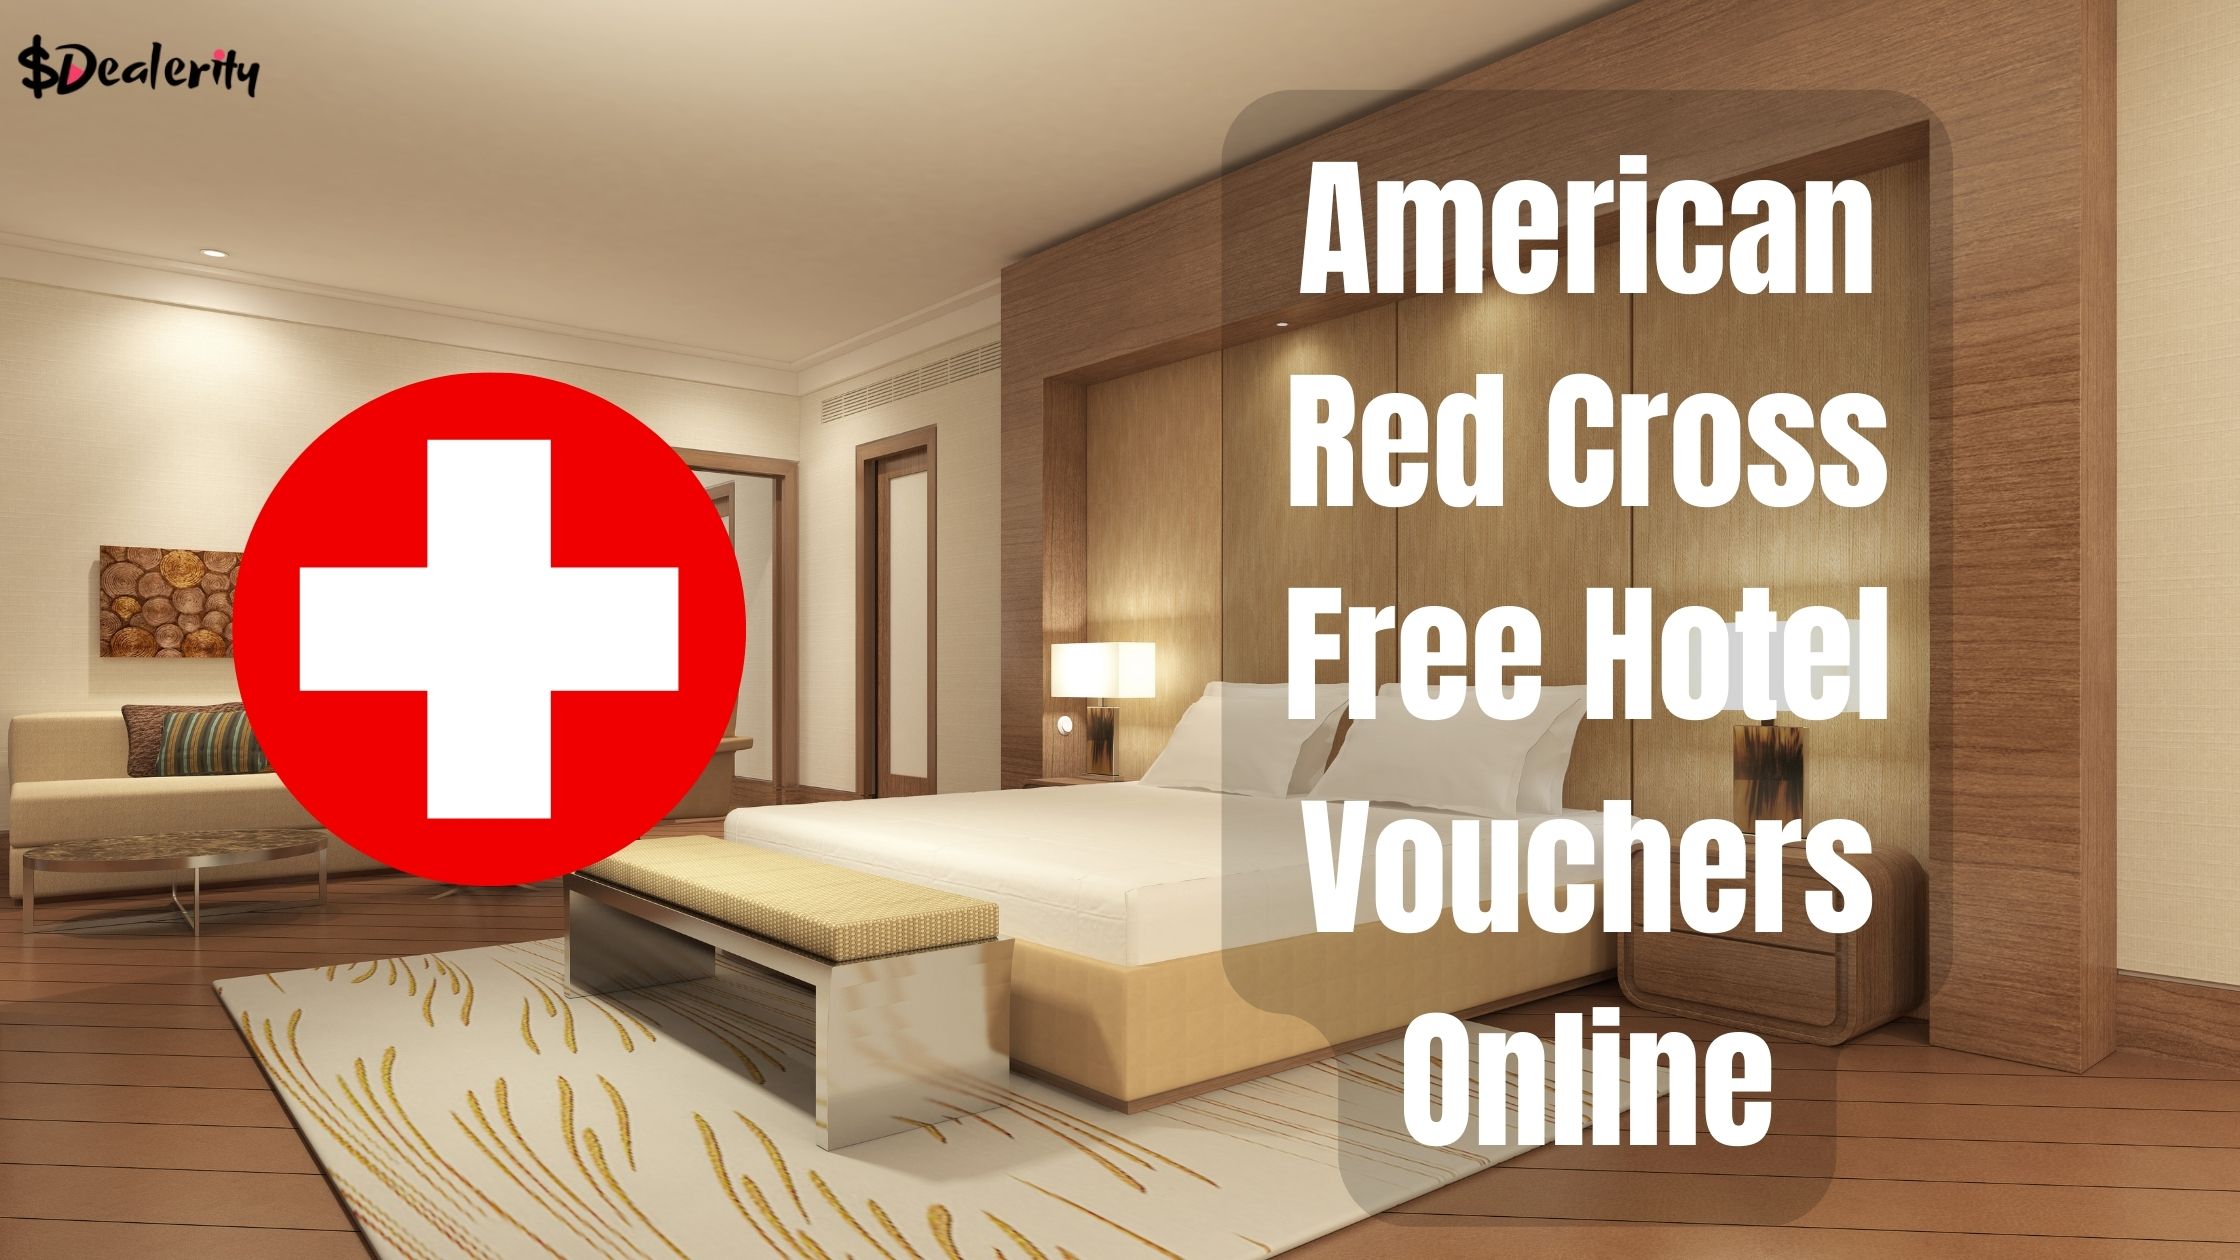 American Red Cross Free Hotel Vouchers Online